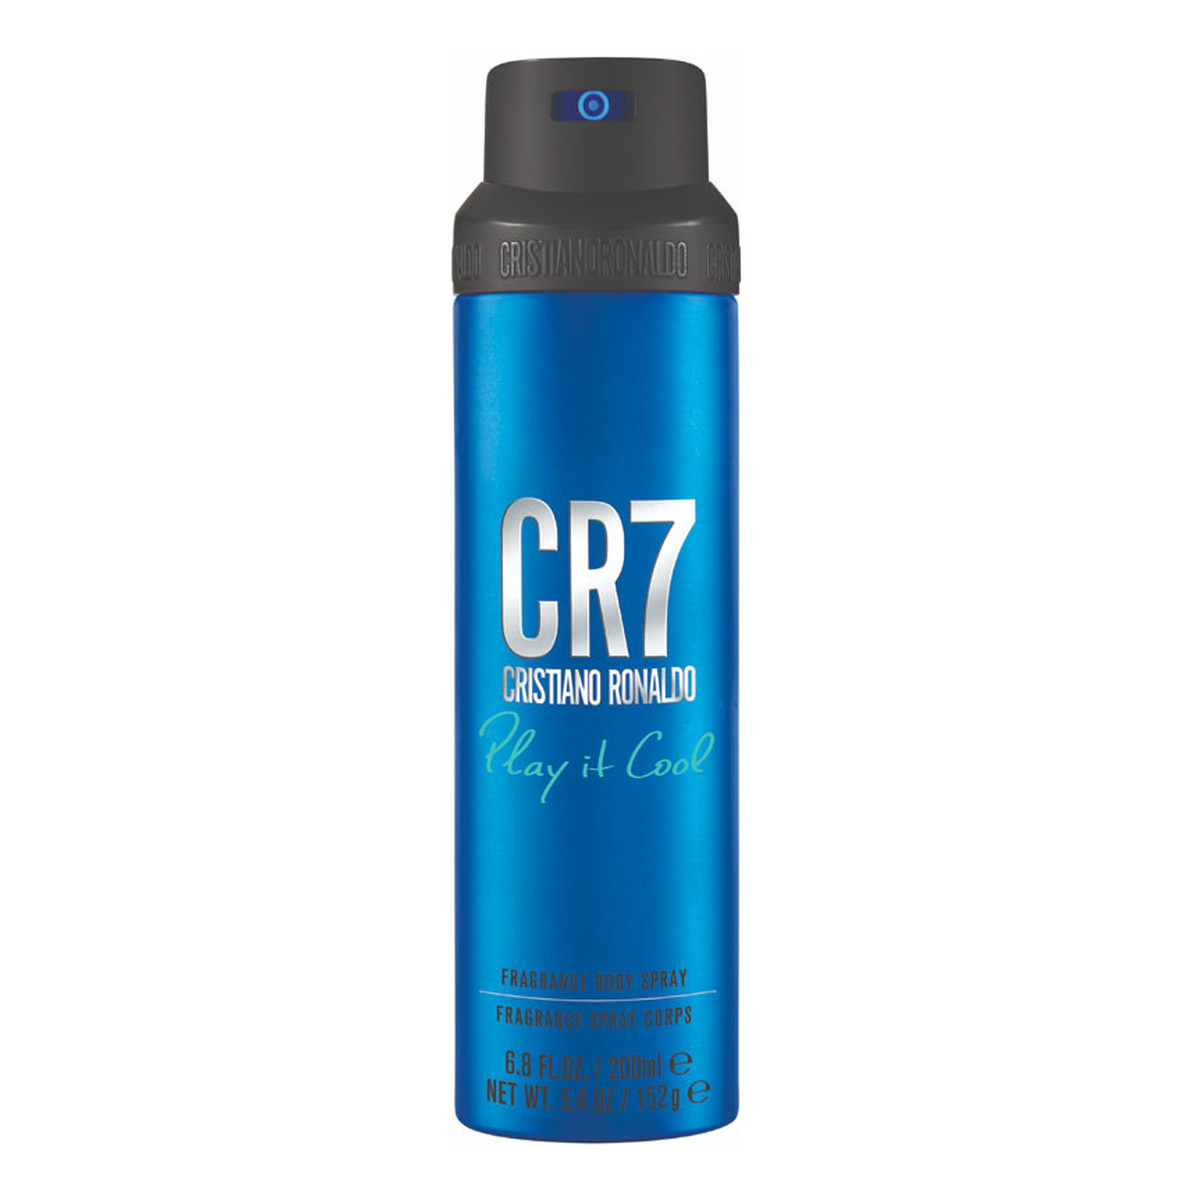 Cristiano Ronaldo CR7 Play it Cool Dezodorant spray 200ml